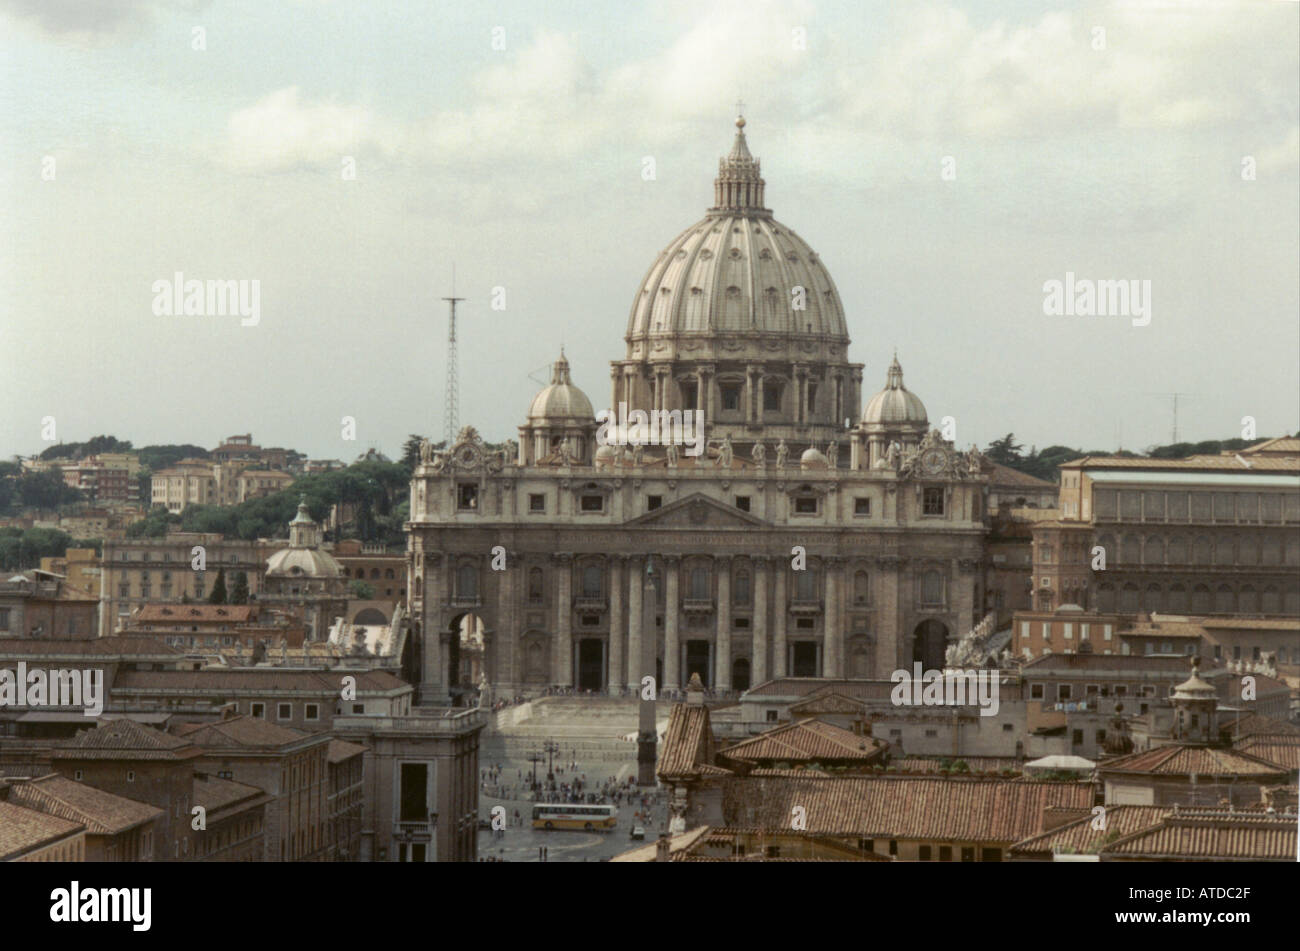 St Peters Platz Rom Vatikan Piazza San Pietro Vatikan Christen Christentum Europa Stadt Reisen Religion katholisch Stockfoto